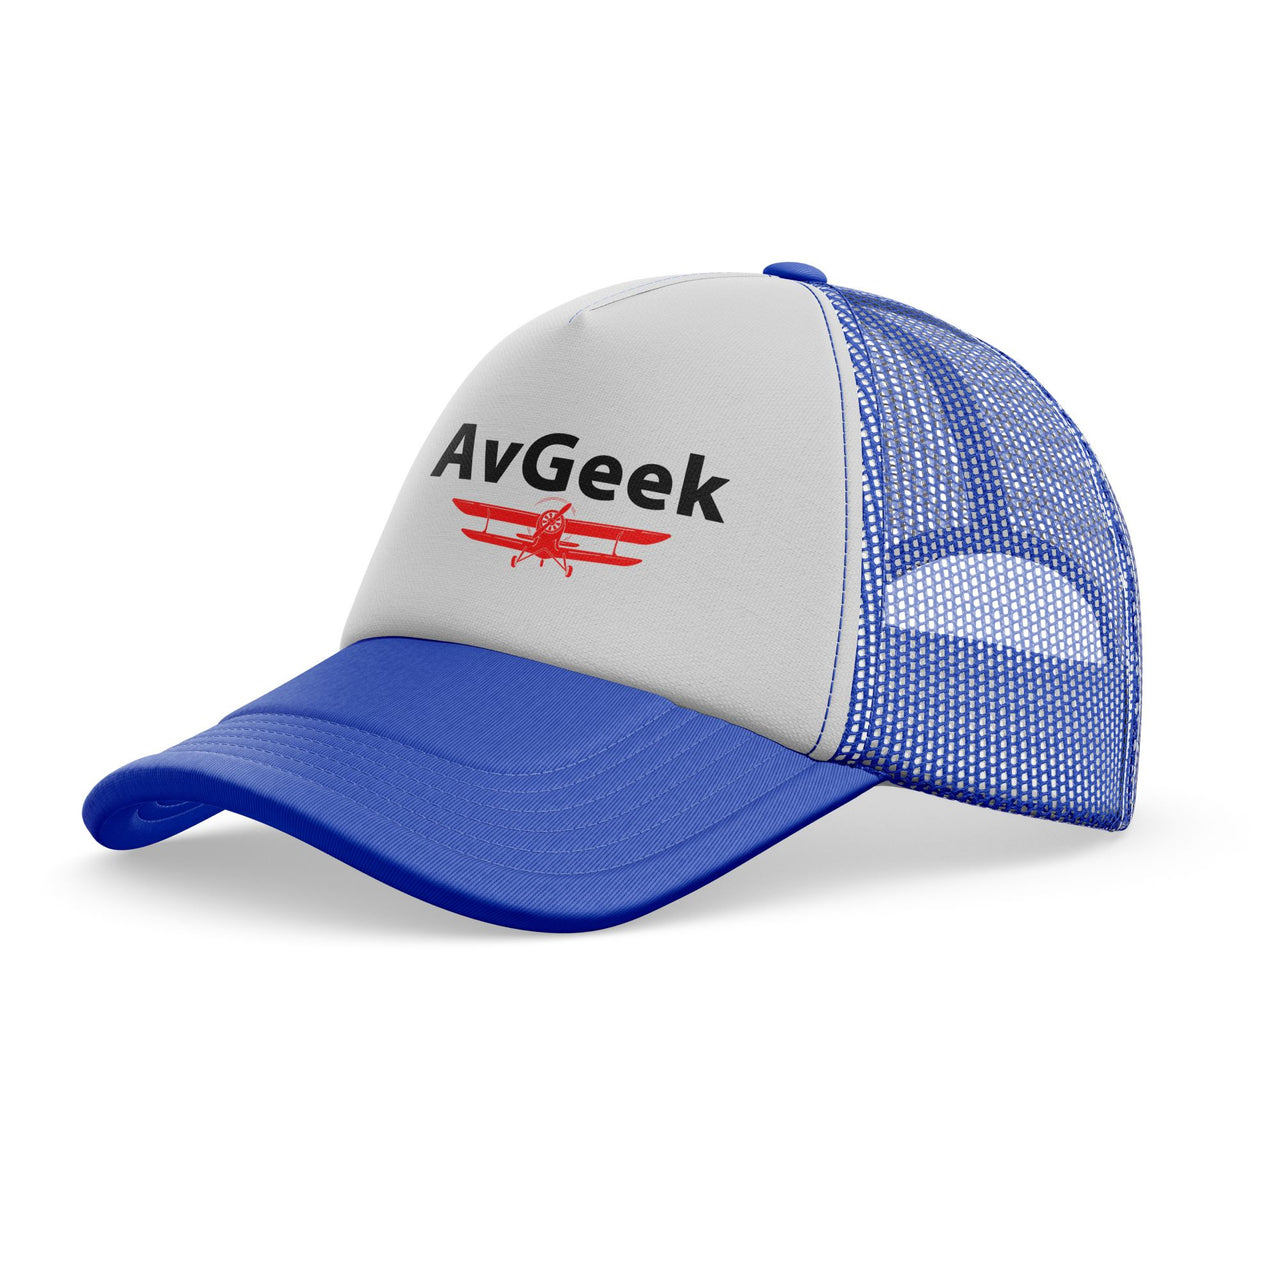 Avgeek Designed Trucker Caps & Hats